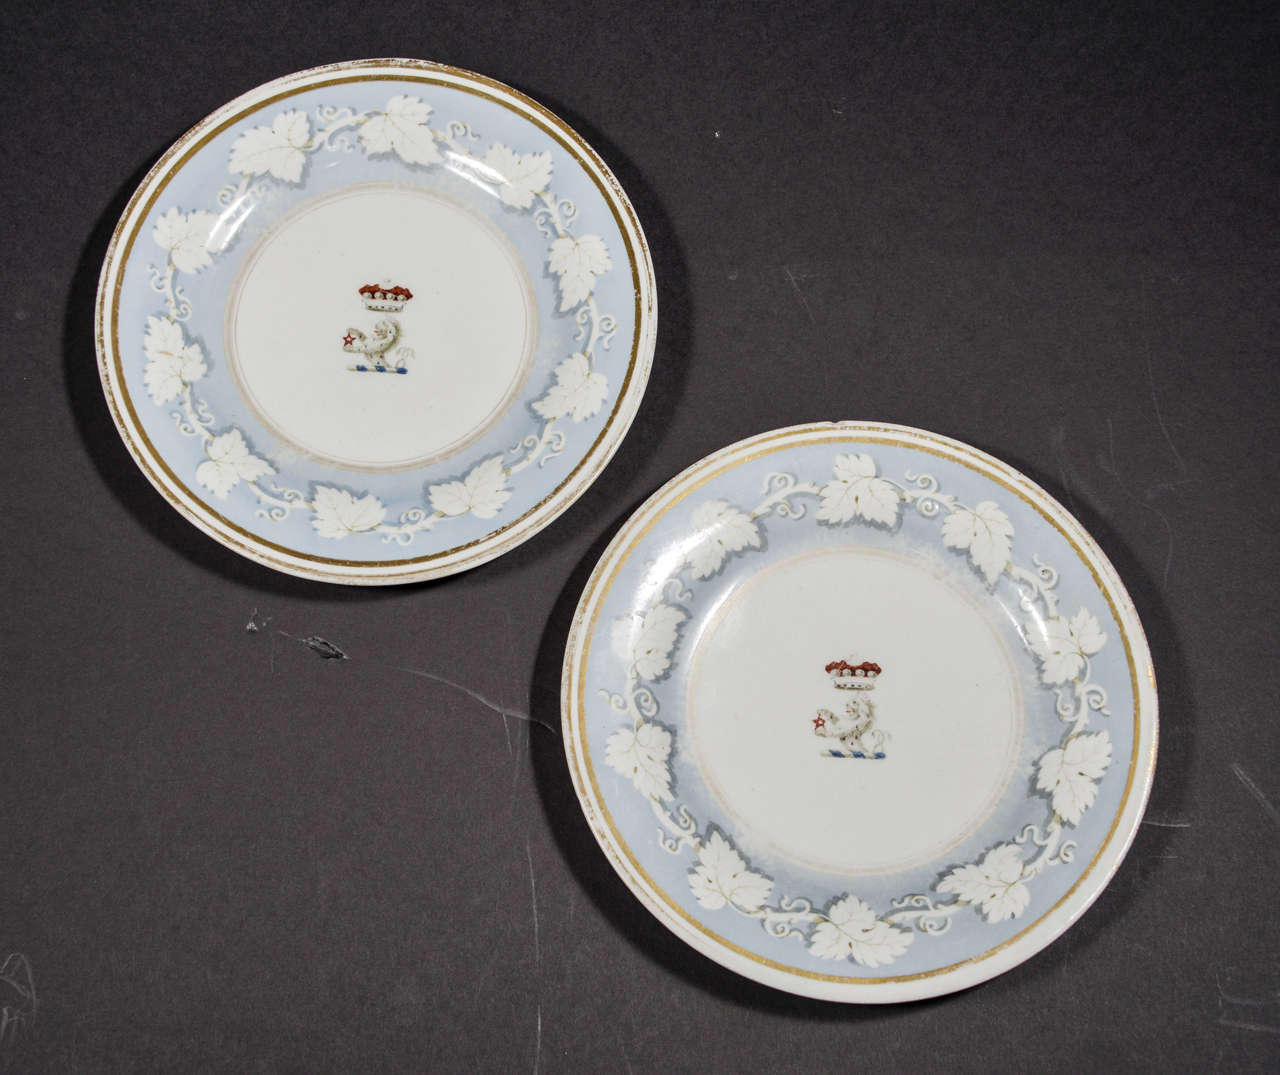 Pair of Flight, Barr & Barr plates (Worchester porcelain) c. 1813-1840.  White with blue transfer leaf border, gold rim, crown over lion in center.